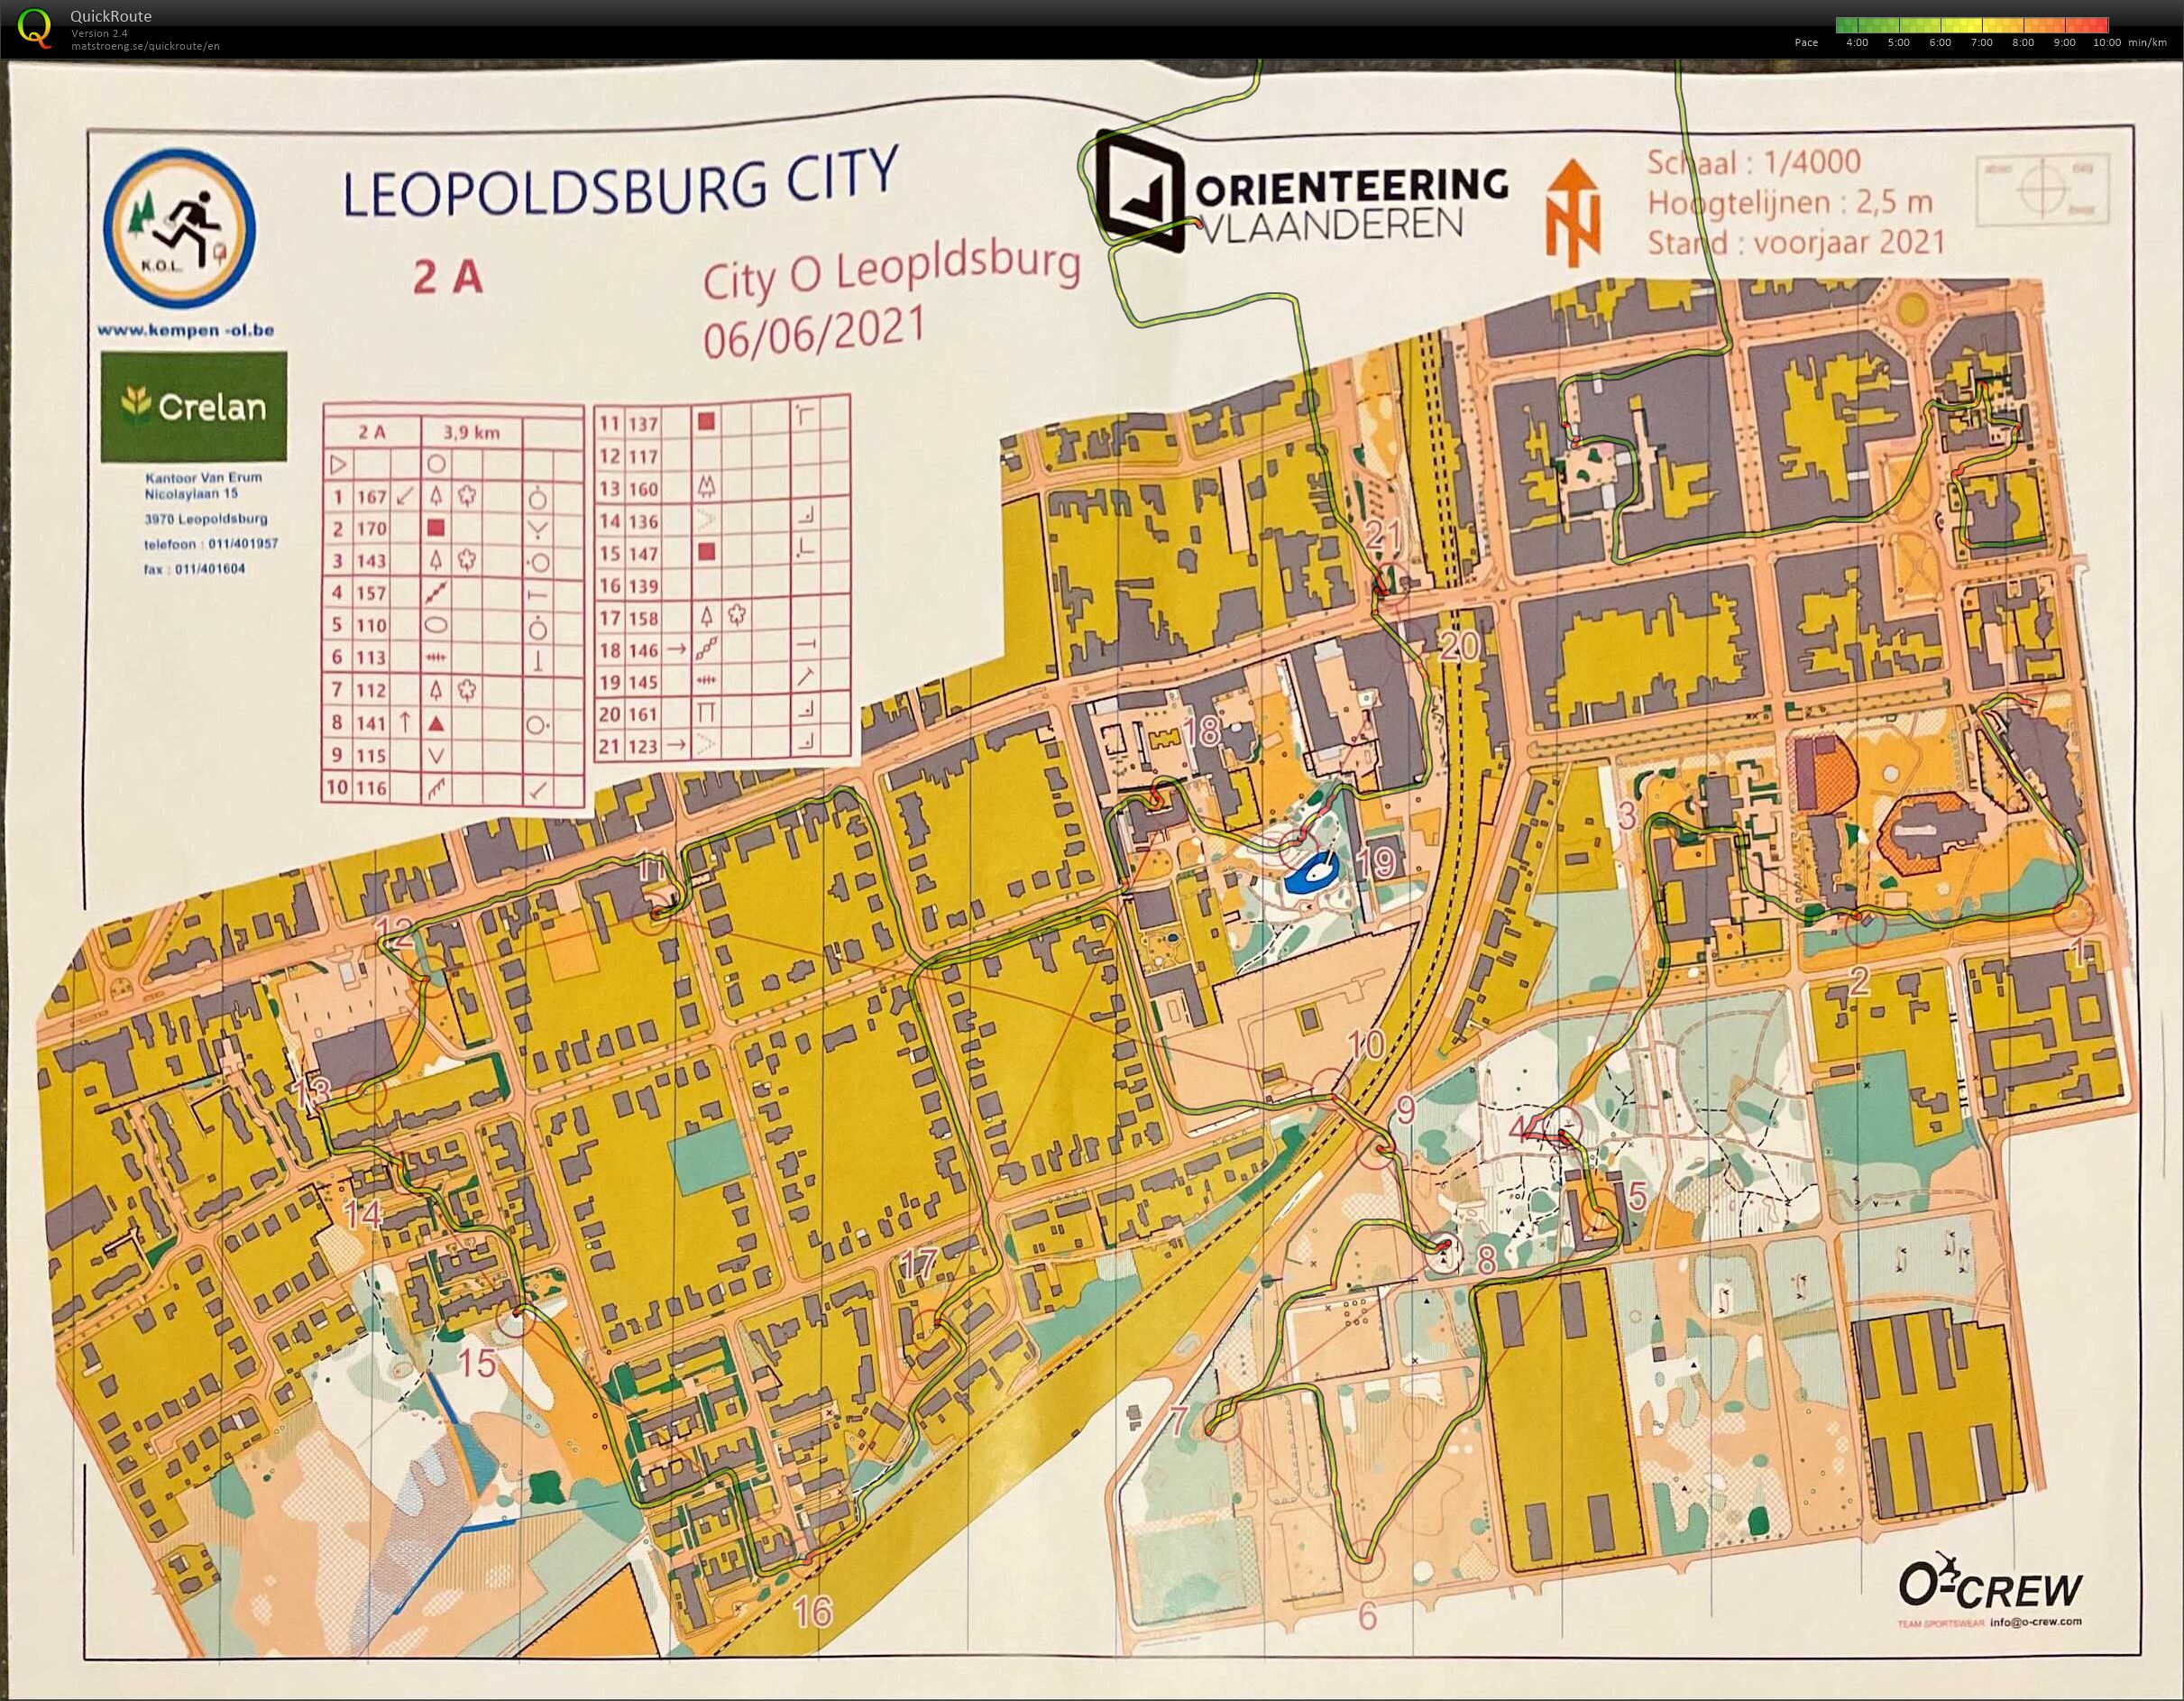 Leopoldsburg City - A (06/06/2021)